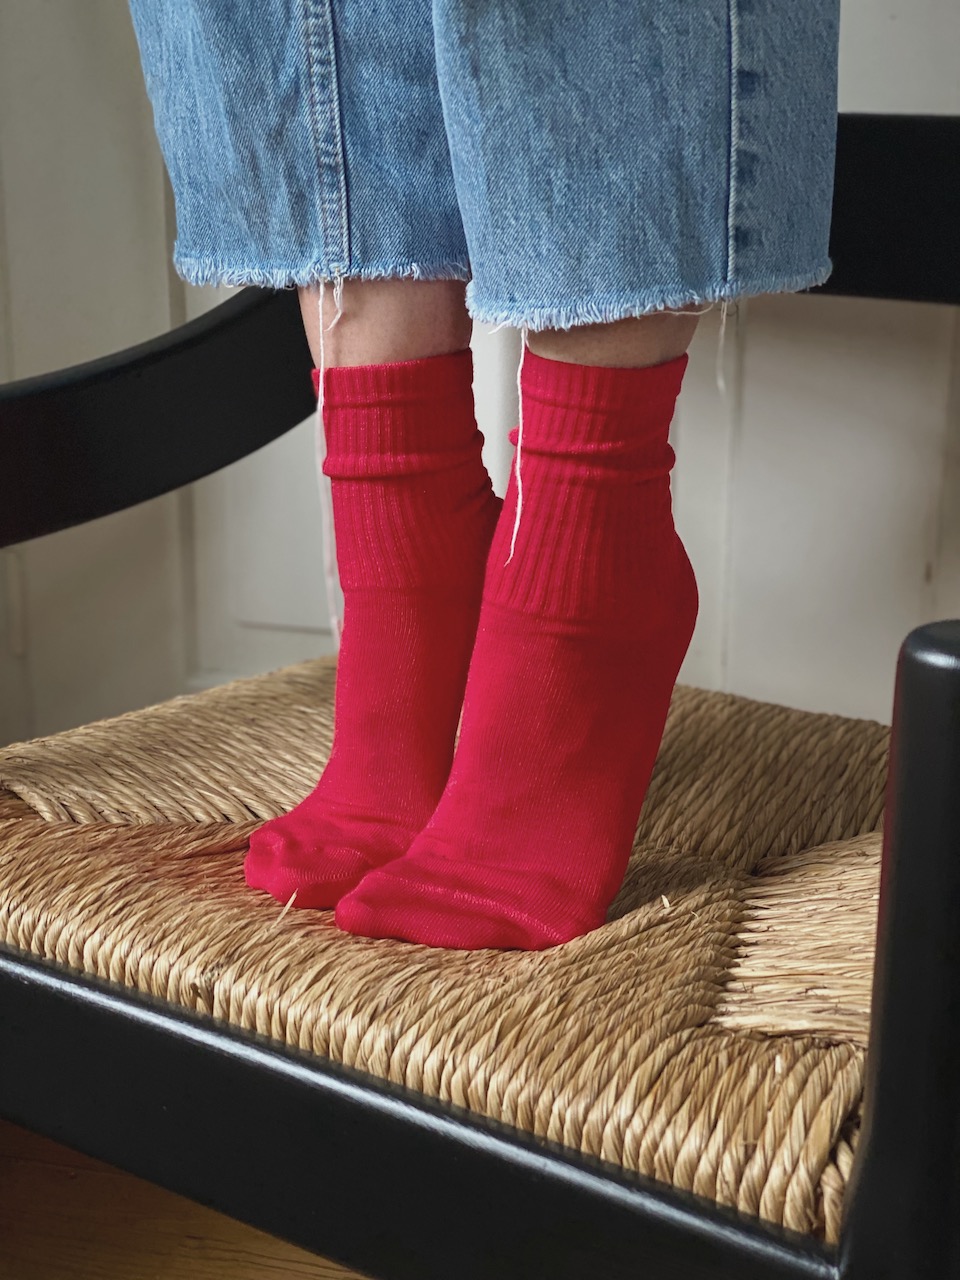 Bild Rote Socken